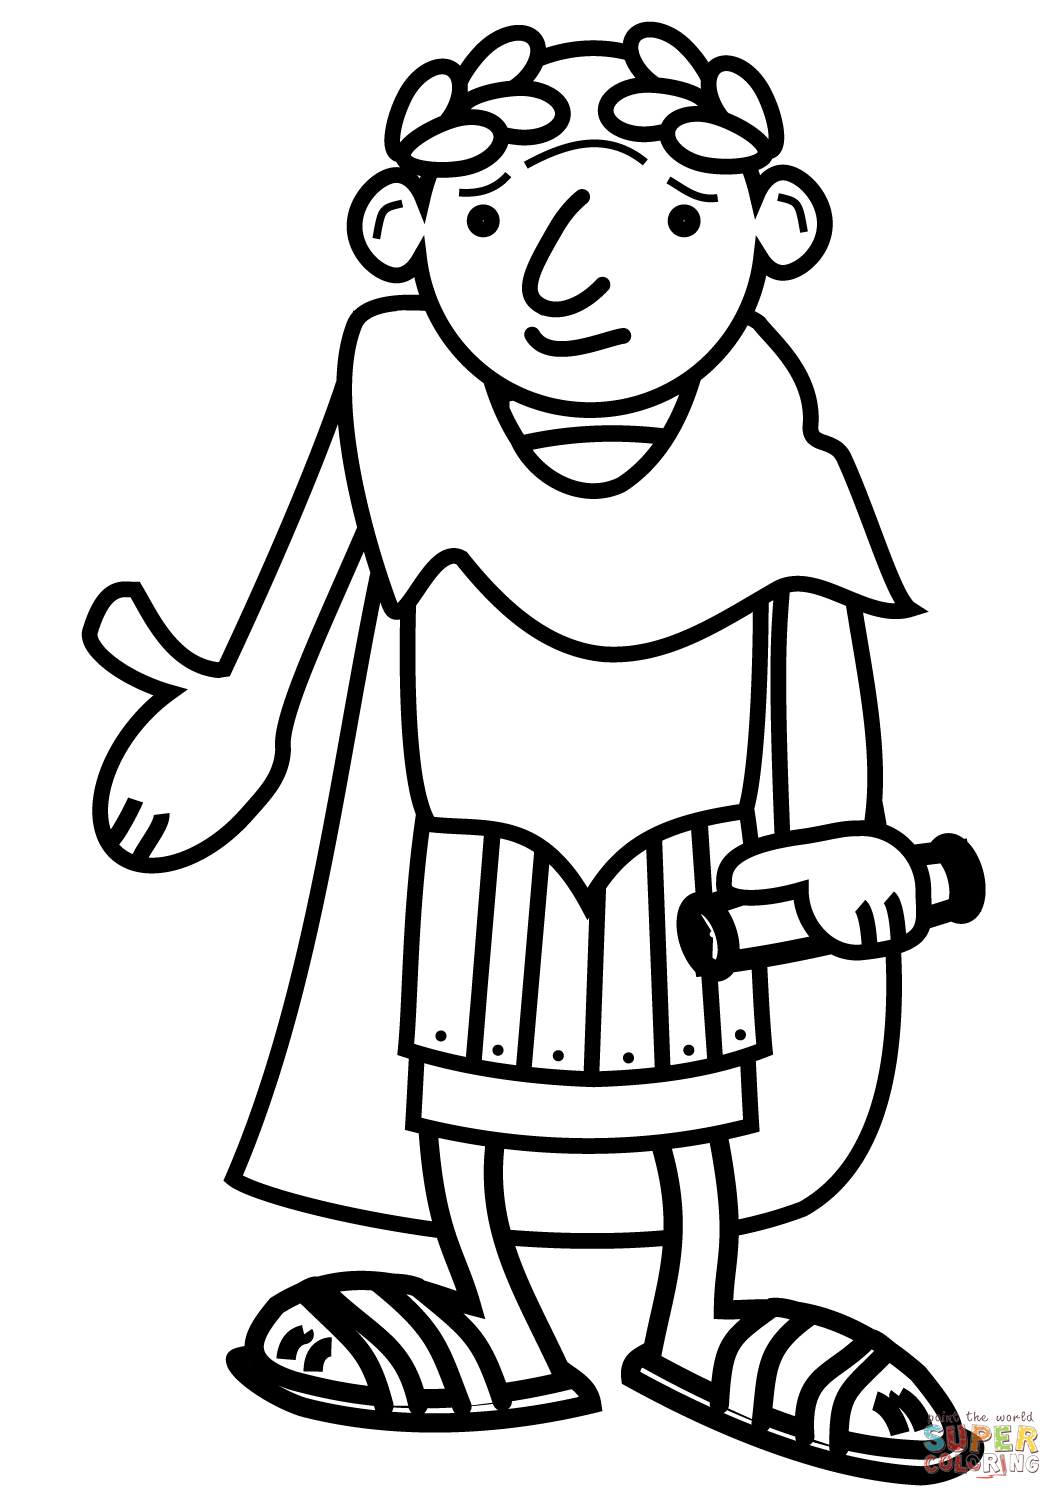 Cartoon Roman Emperor coloring page | Free Printable Coloring Pages